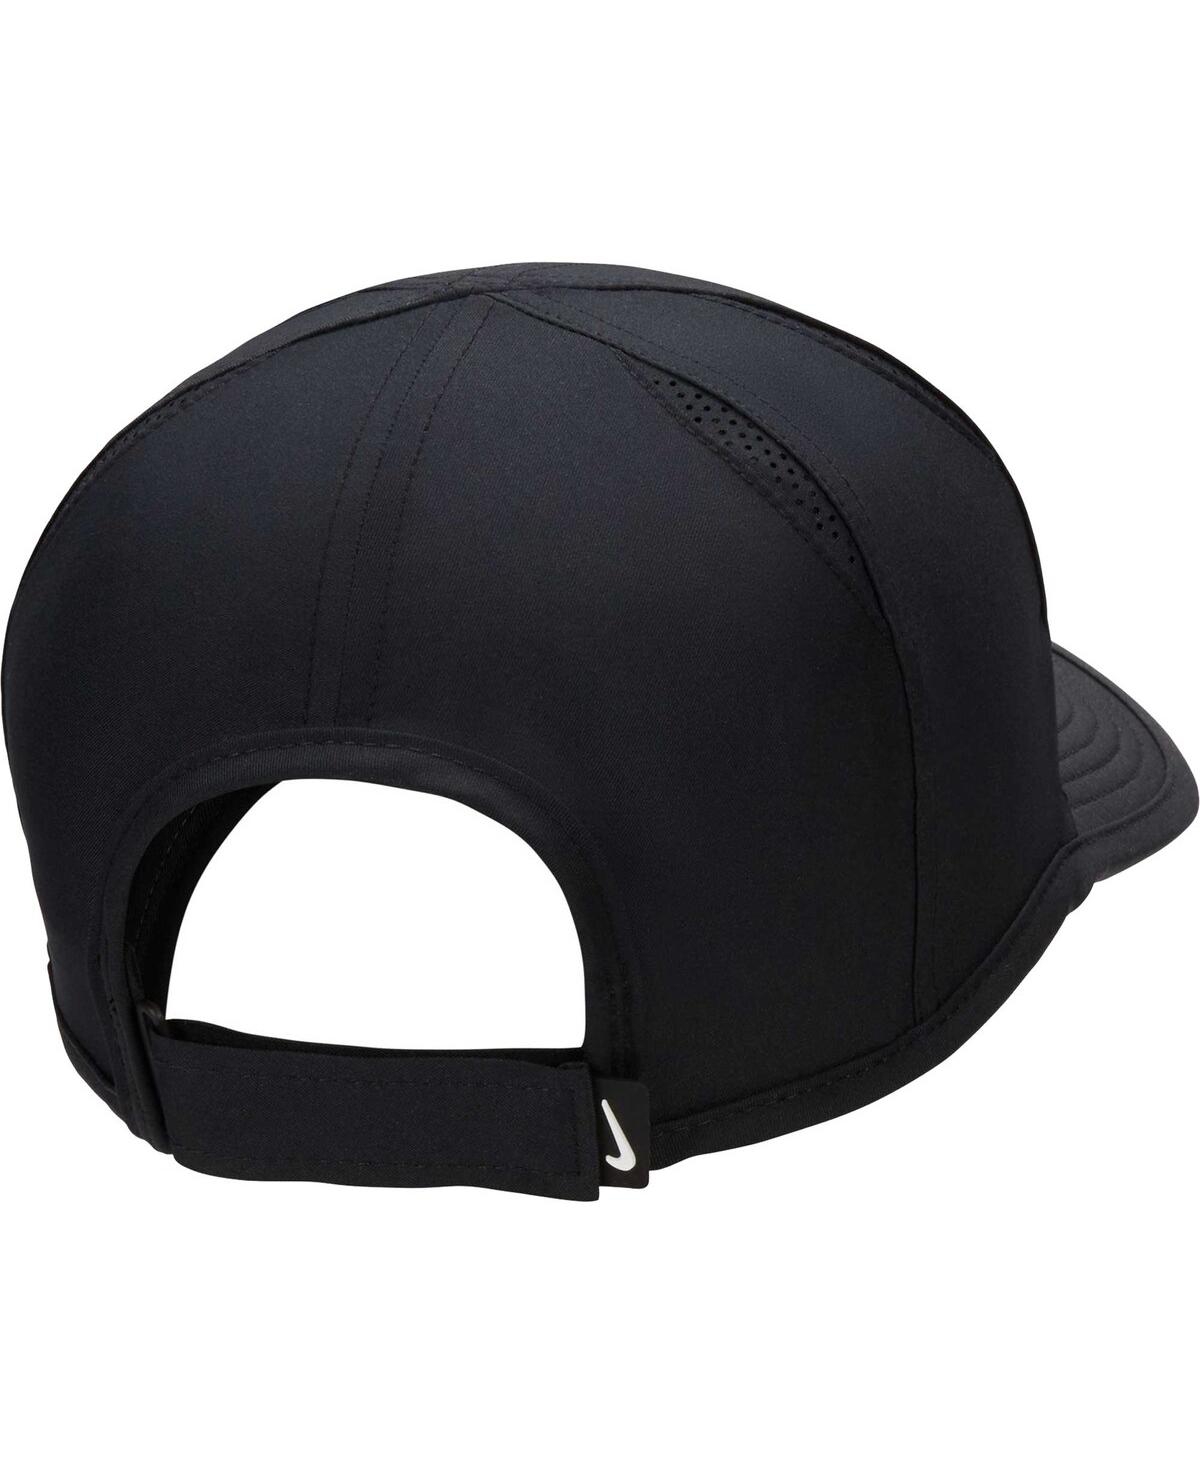 Shop Nike Men's And Women's  Black Featherlight Club Performance Adjustable Hat